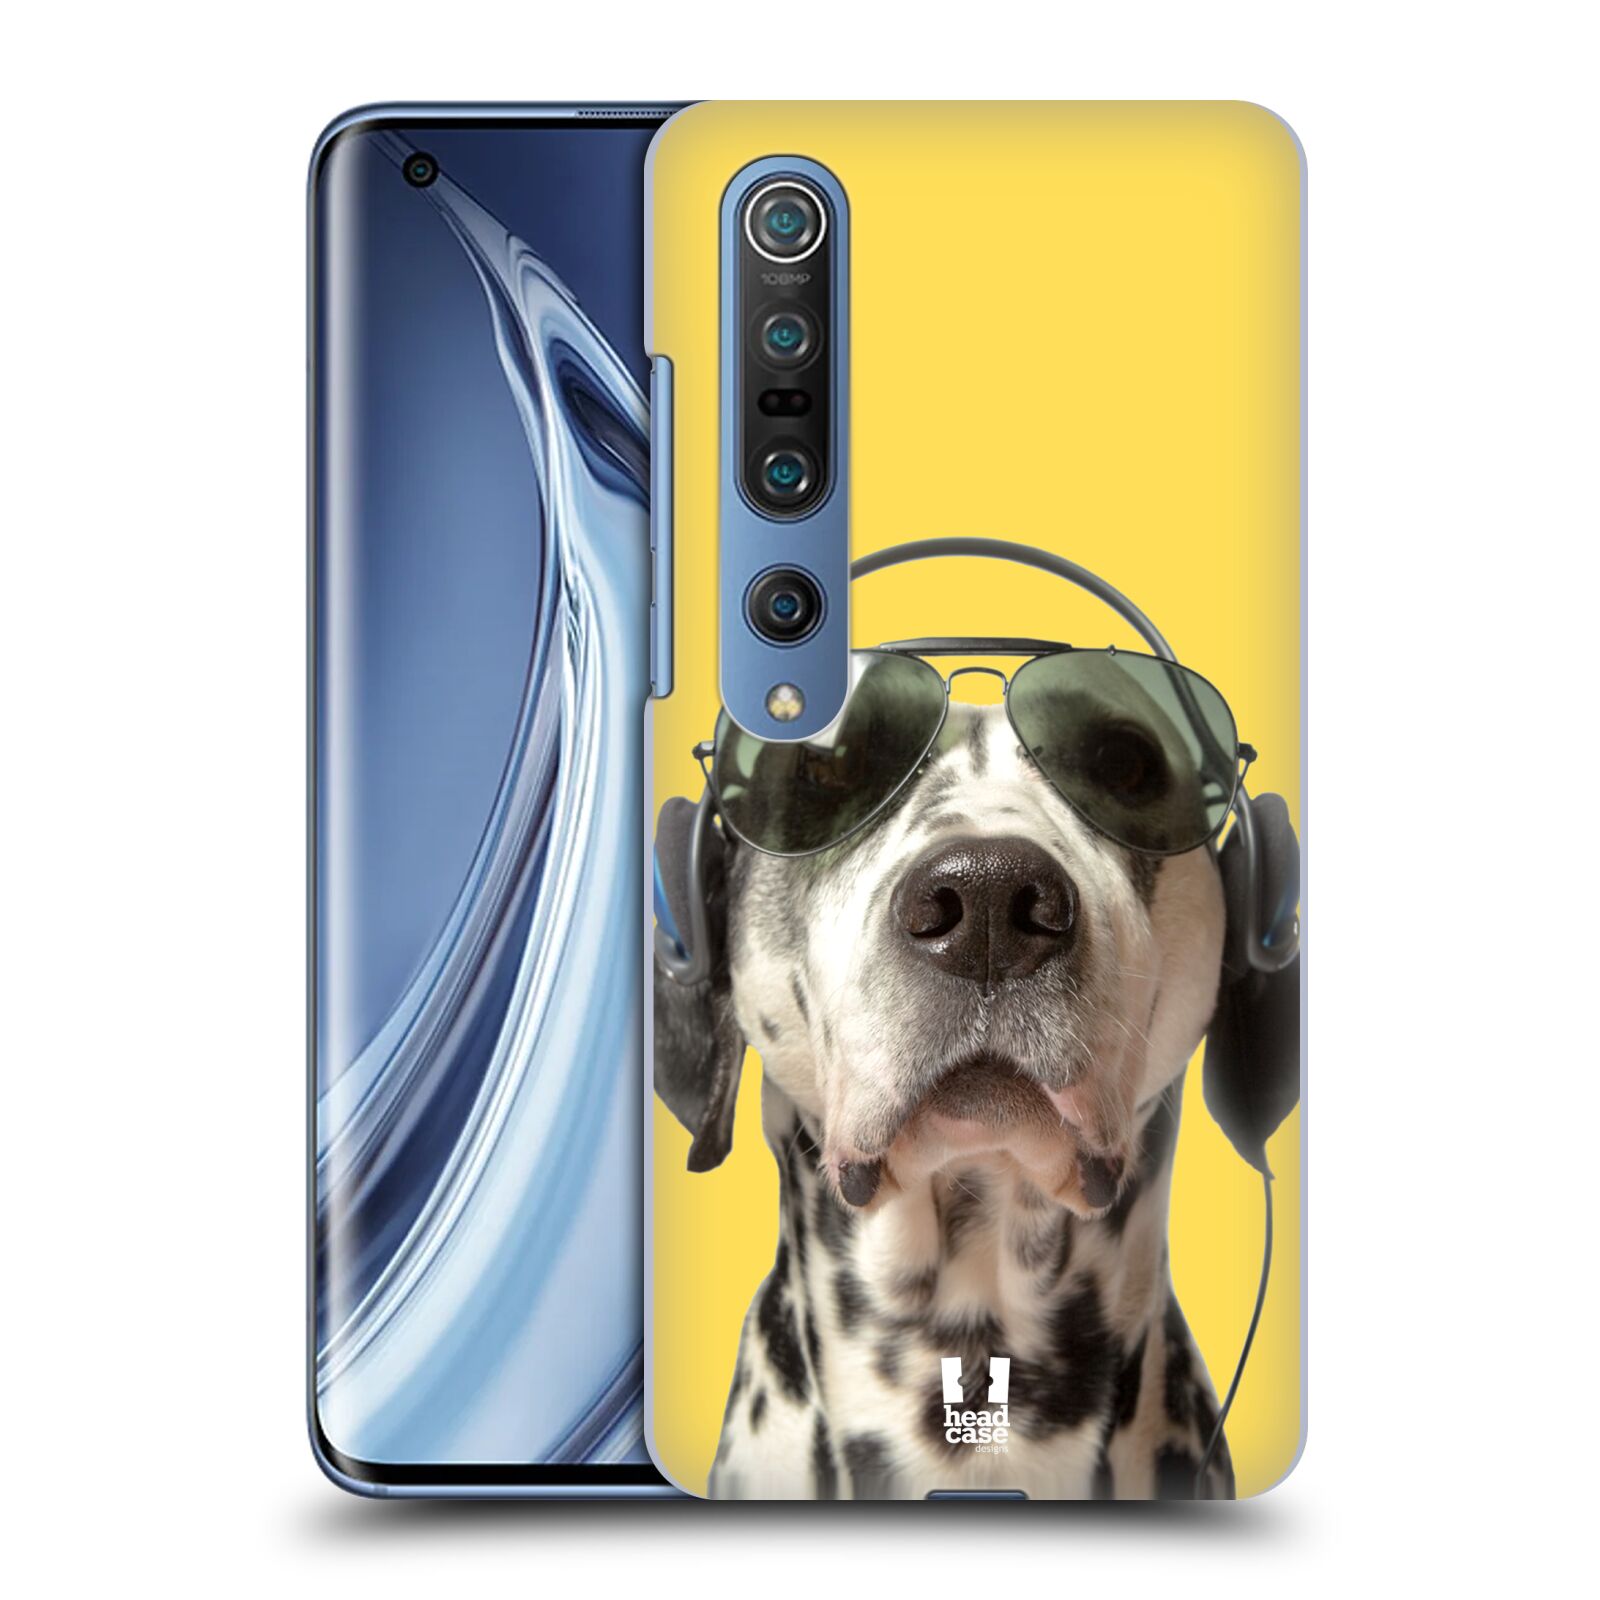 HEAD CASE plastový obal na mobil Xiaomi Mi 10 vzor Legrační zvířátka dalmatin se sluchátky žlutá